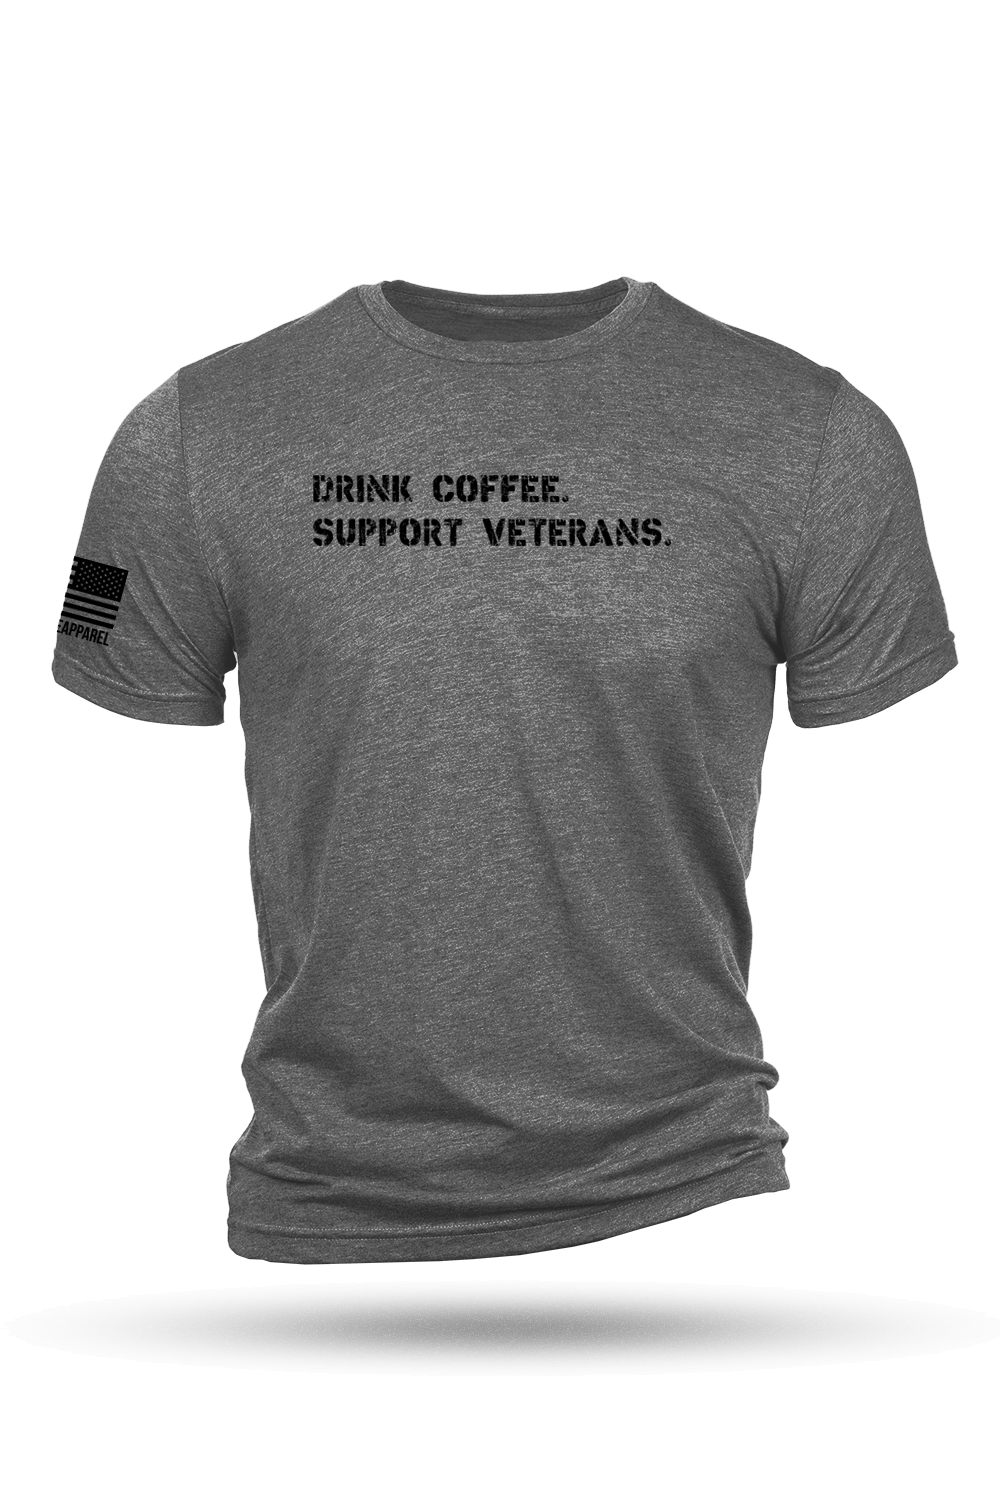 T - Shirt - Drink Coffee Support Veterans